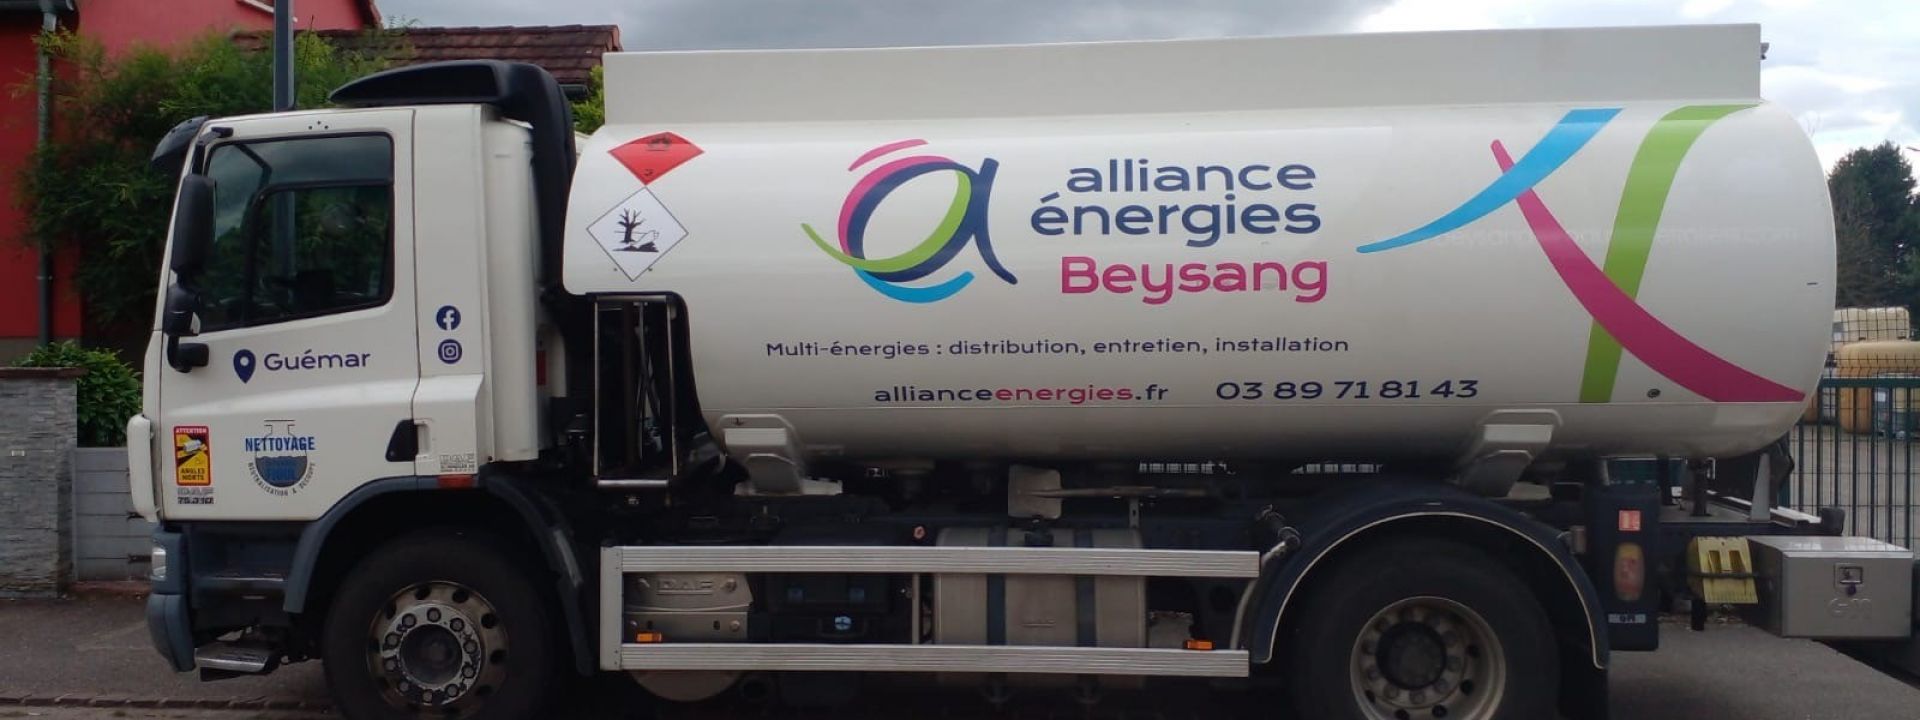 Camion de distribution de fioul chez Beysang Énergies